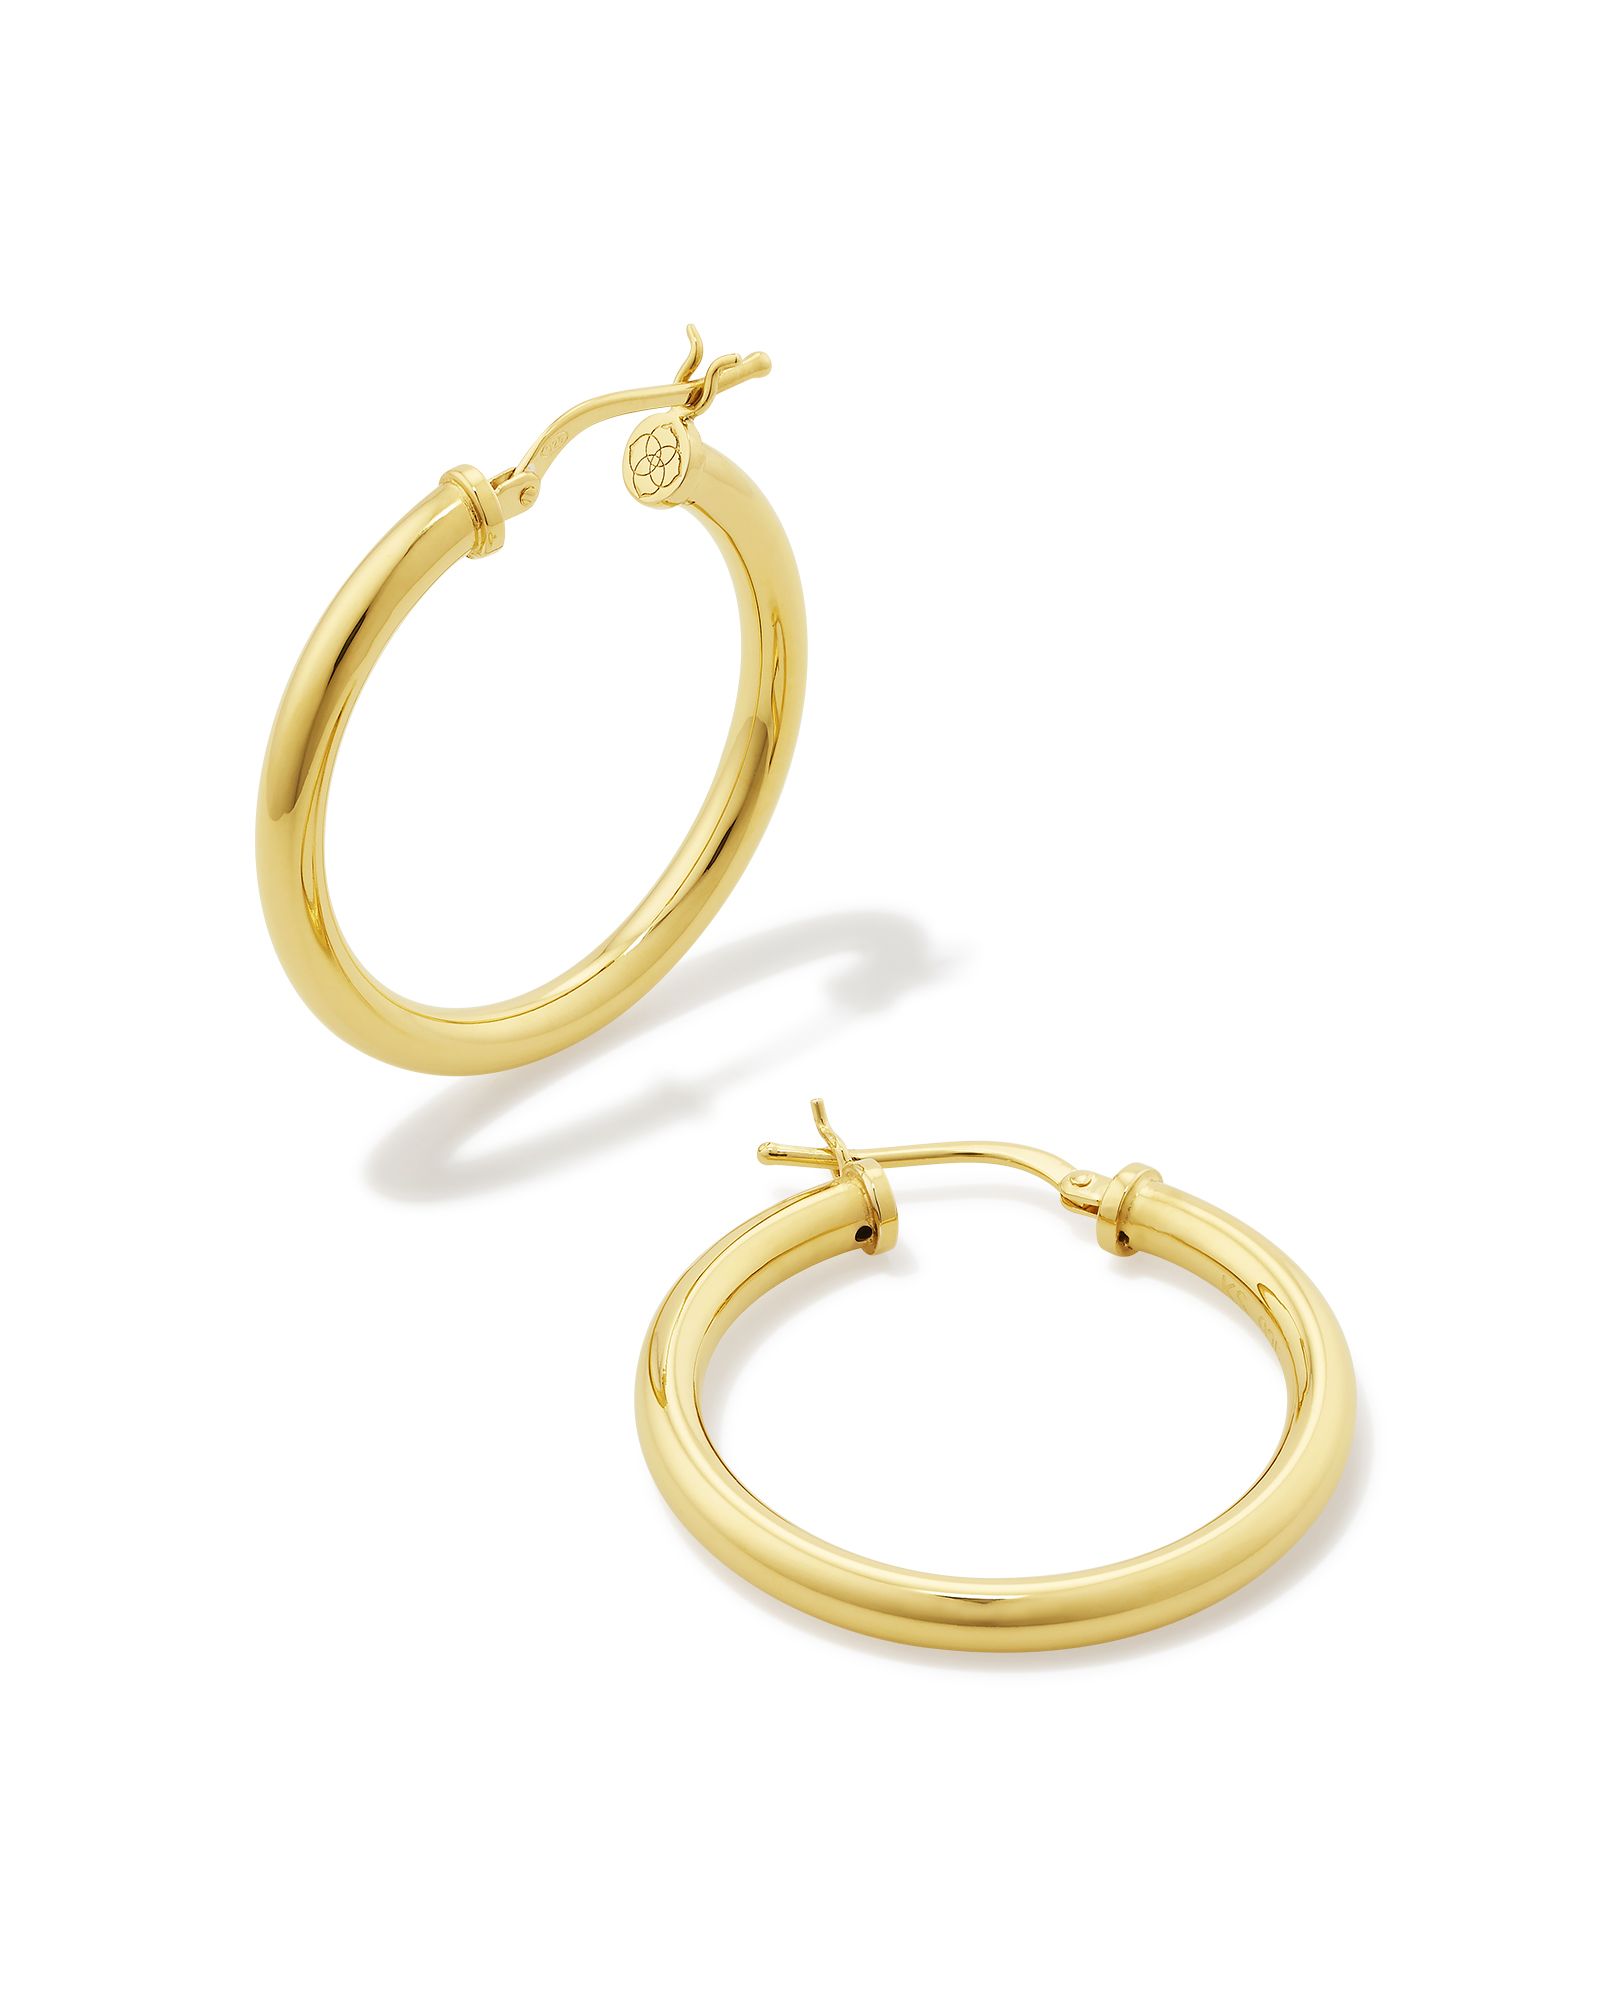 Tube Medium 30mm Hoop Earrings in 18k Gold Vermeil | Kendra Scott | Kendra Scott